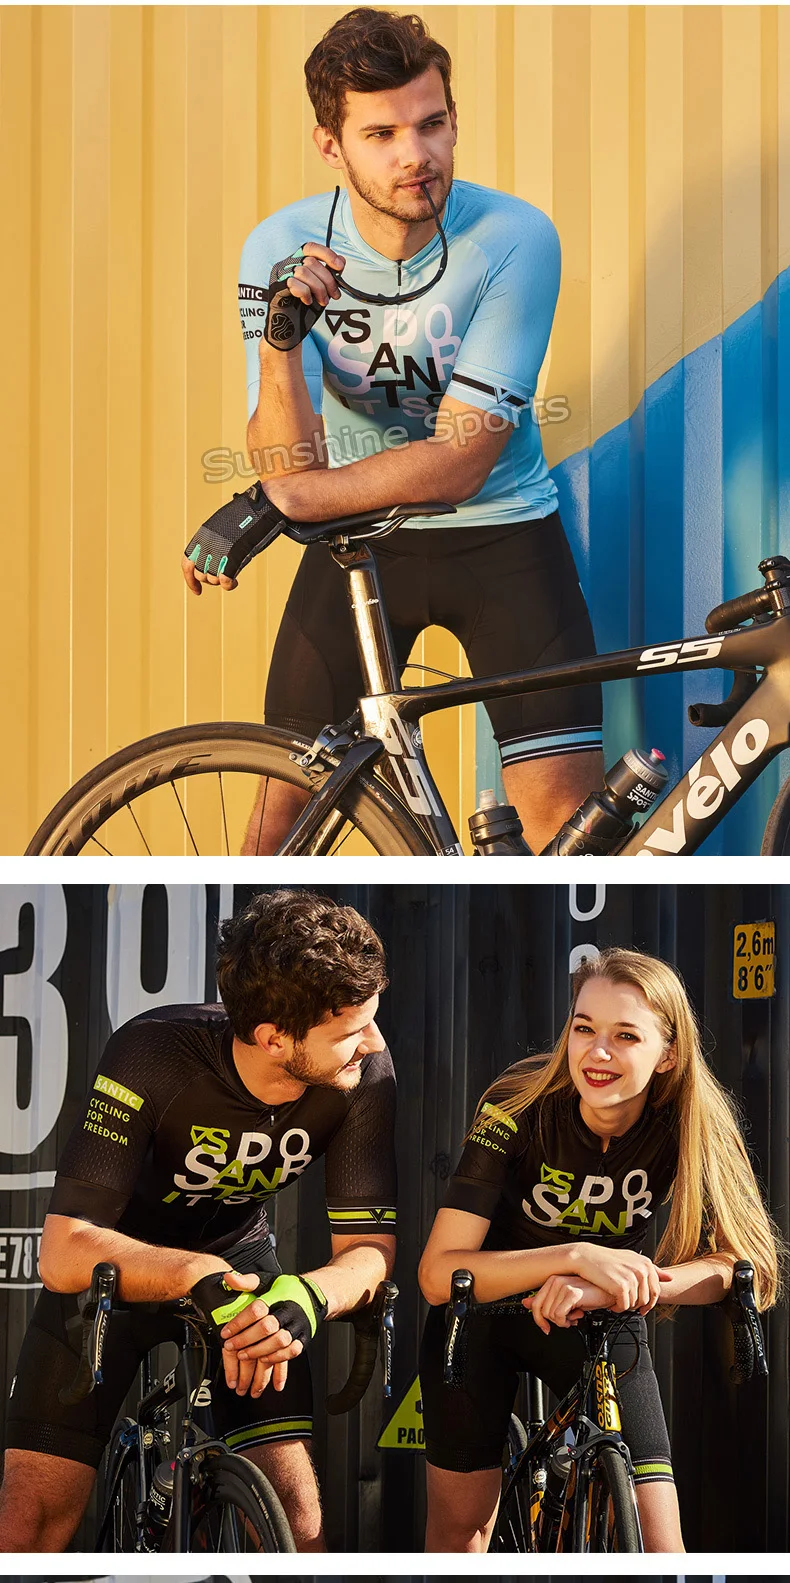 Santic Велоспорт Джерси комплект для женщин мужчин короткий рукав 2019 Pro Team Одежда для велоспорта Одежда Велосипедный спорт Майо Ropa Ciclismo